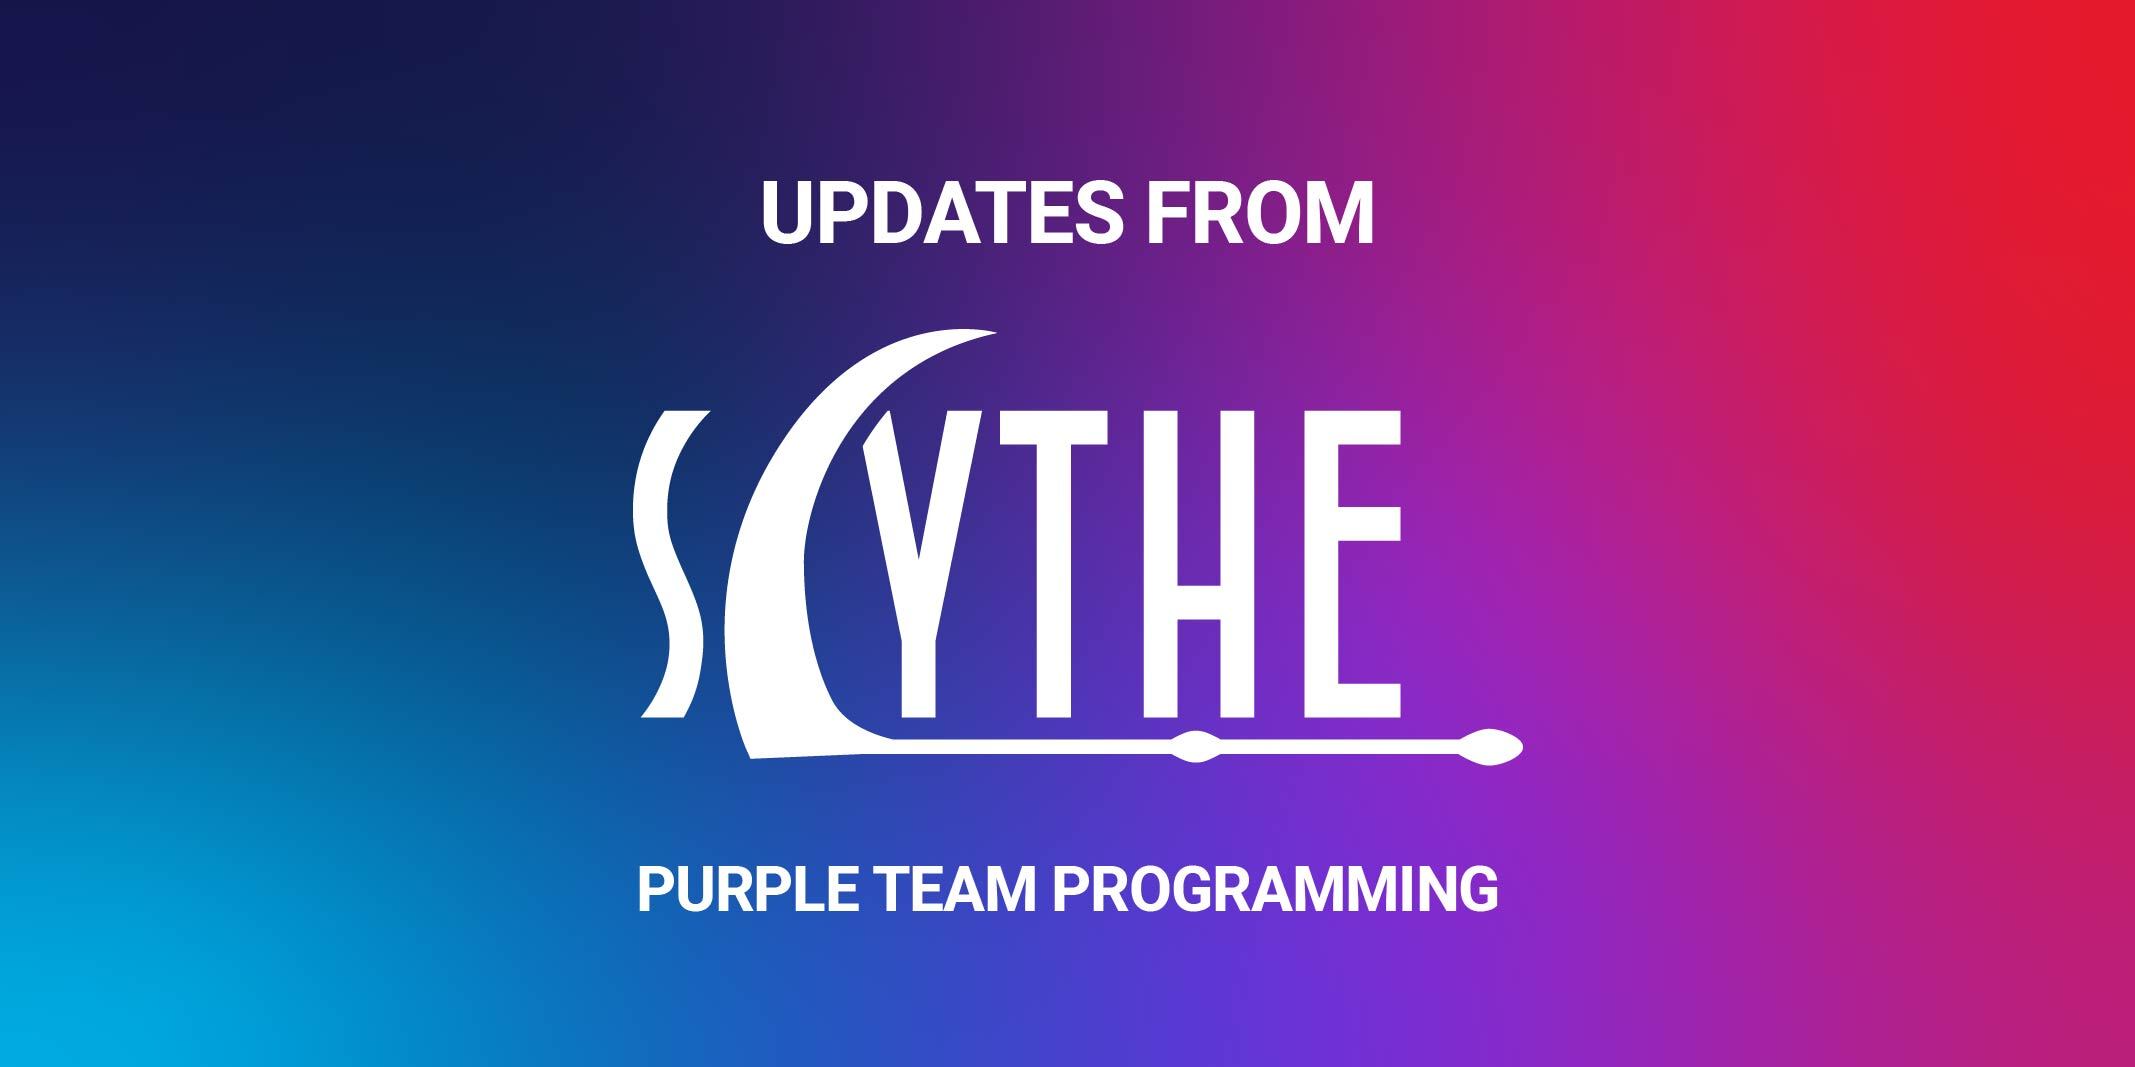 SCYTHE Updates: Purple Team Programming